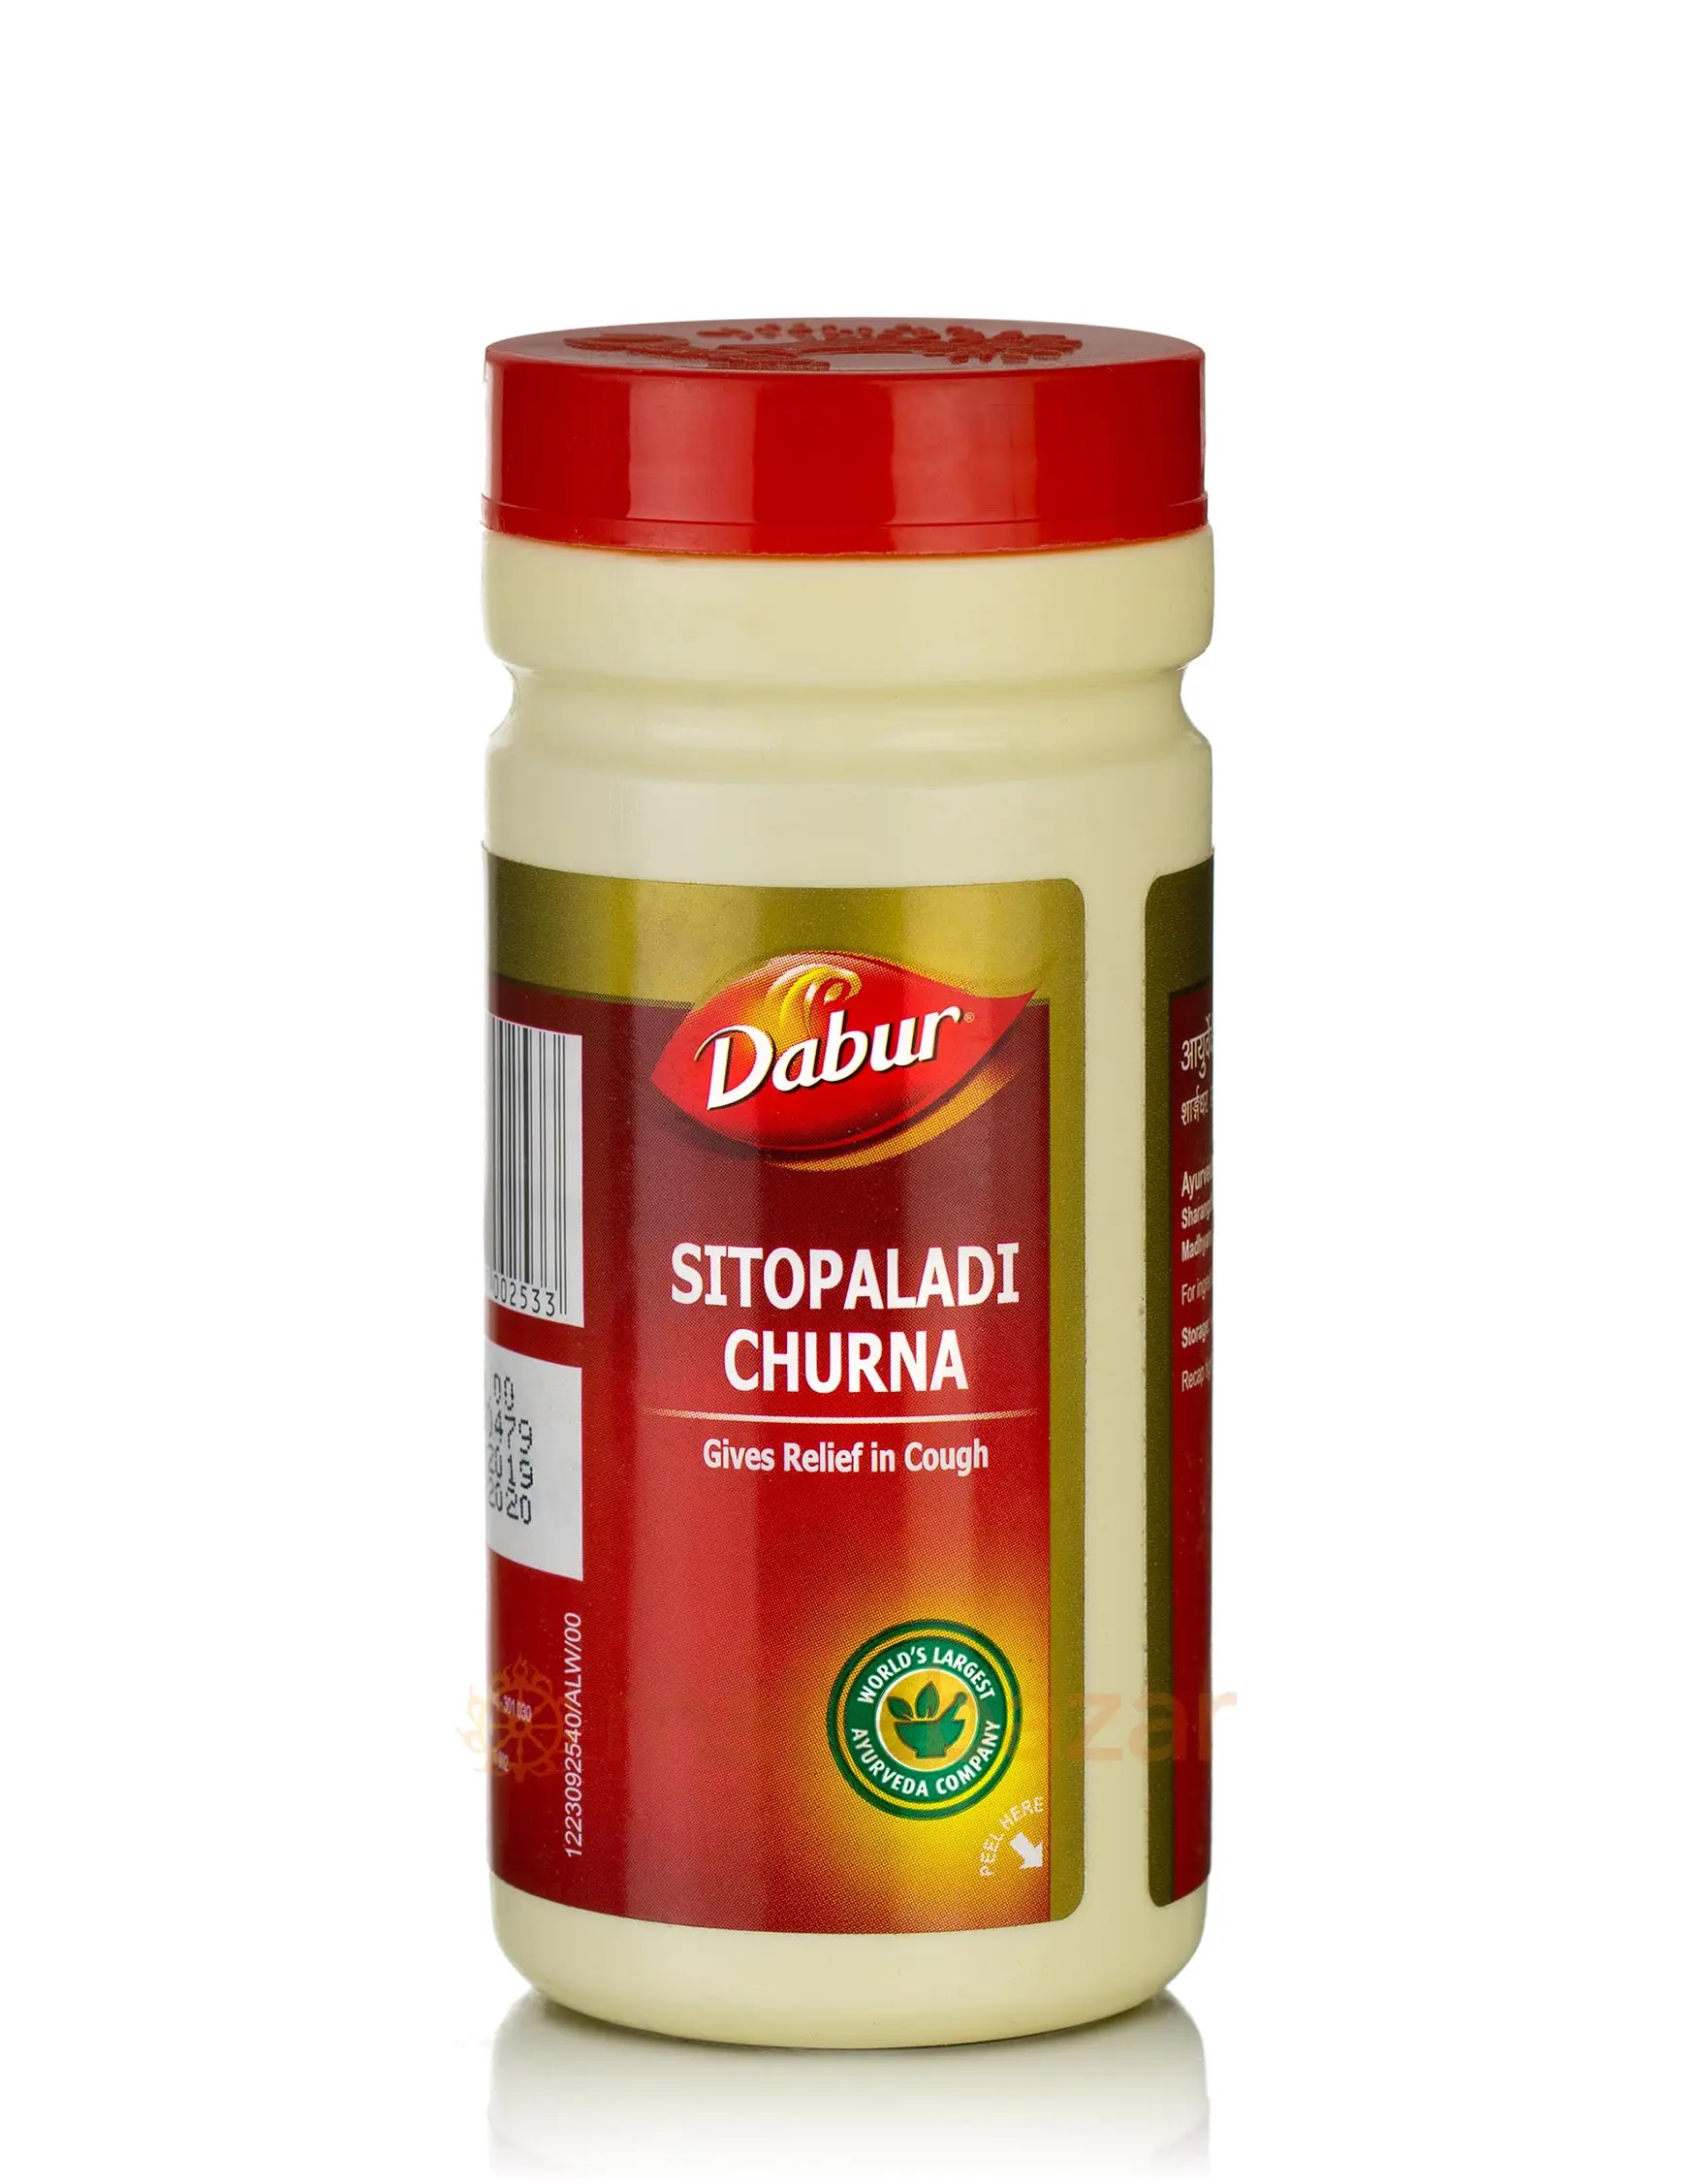 Ситопалади Дабур (порошок при кашле, жаропонижающее) Sitopaladi Churna Dabur 60 гр.